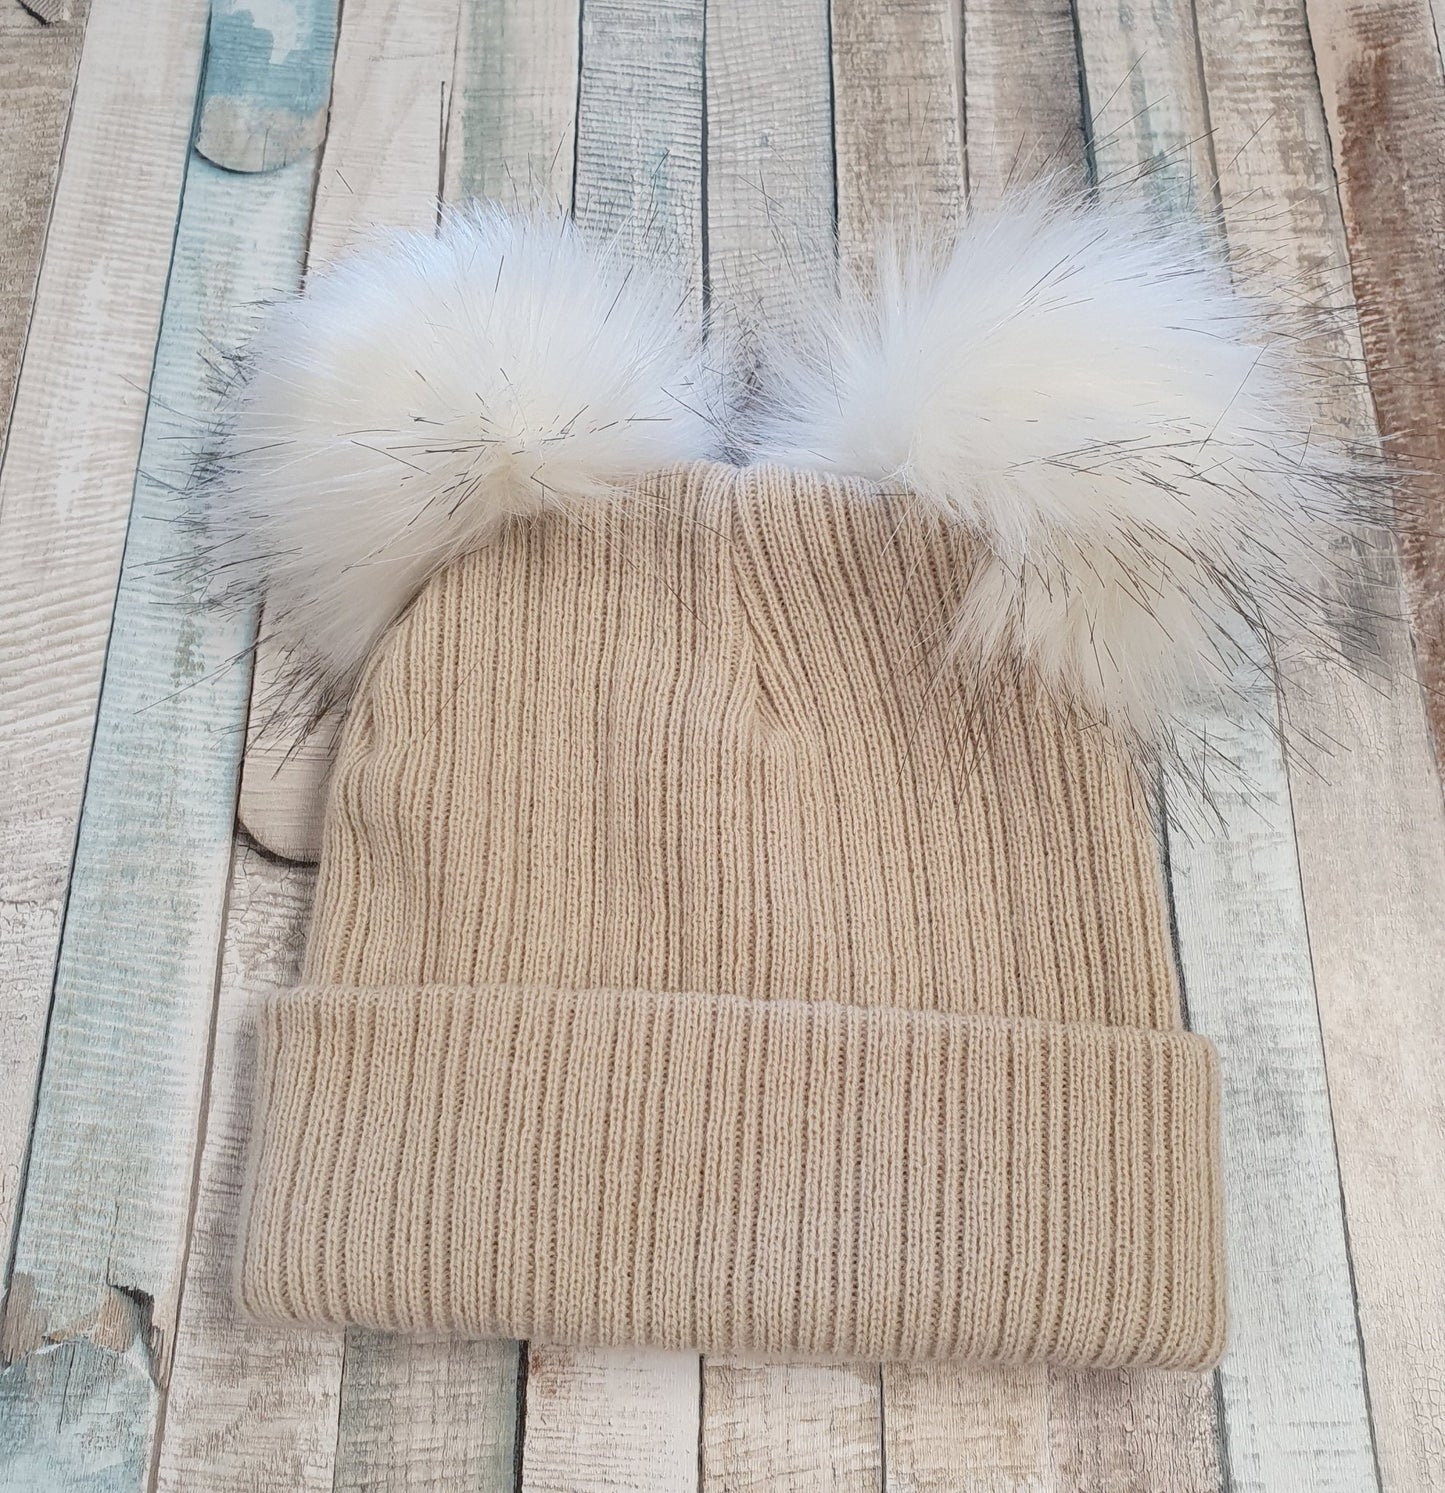 Beige Knitted Double Faux Fur Fluffy Pom Pom Hat - Nana B Baby & Childrenswear Boutique